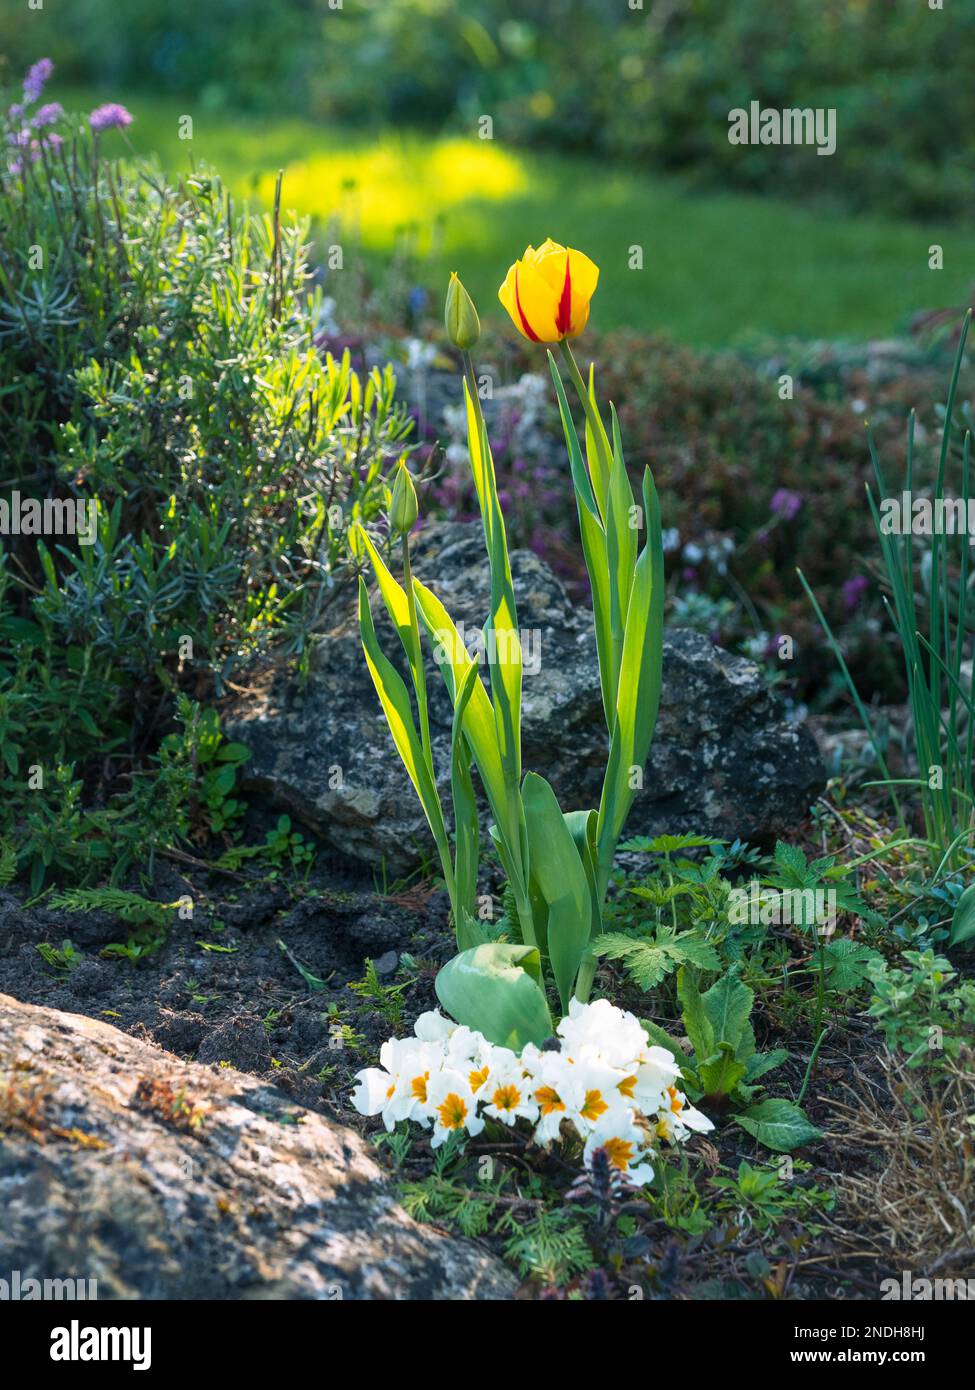 Yellow tulip (tulipa) with red stripe on petals in rock garden border Stock Photo